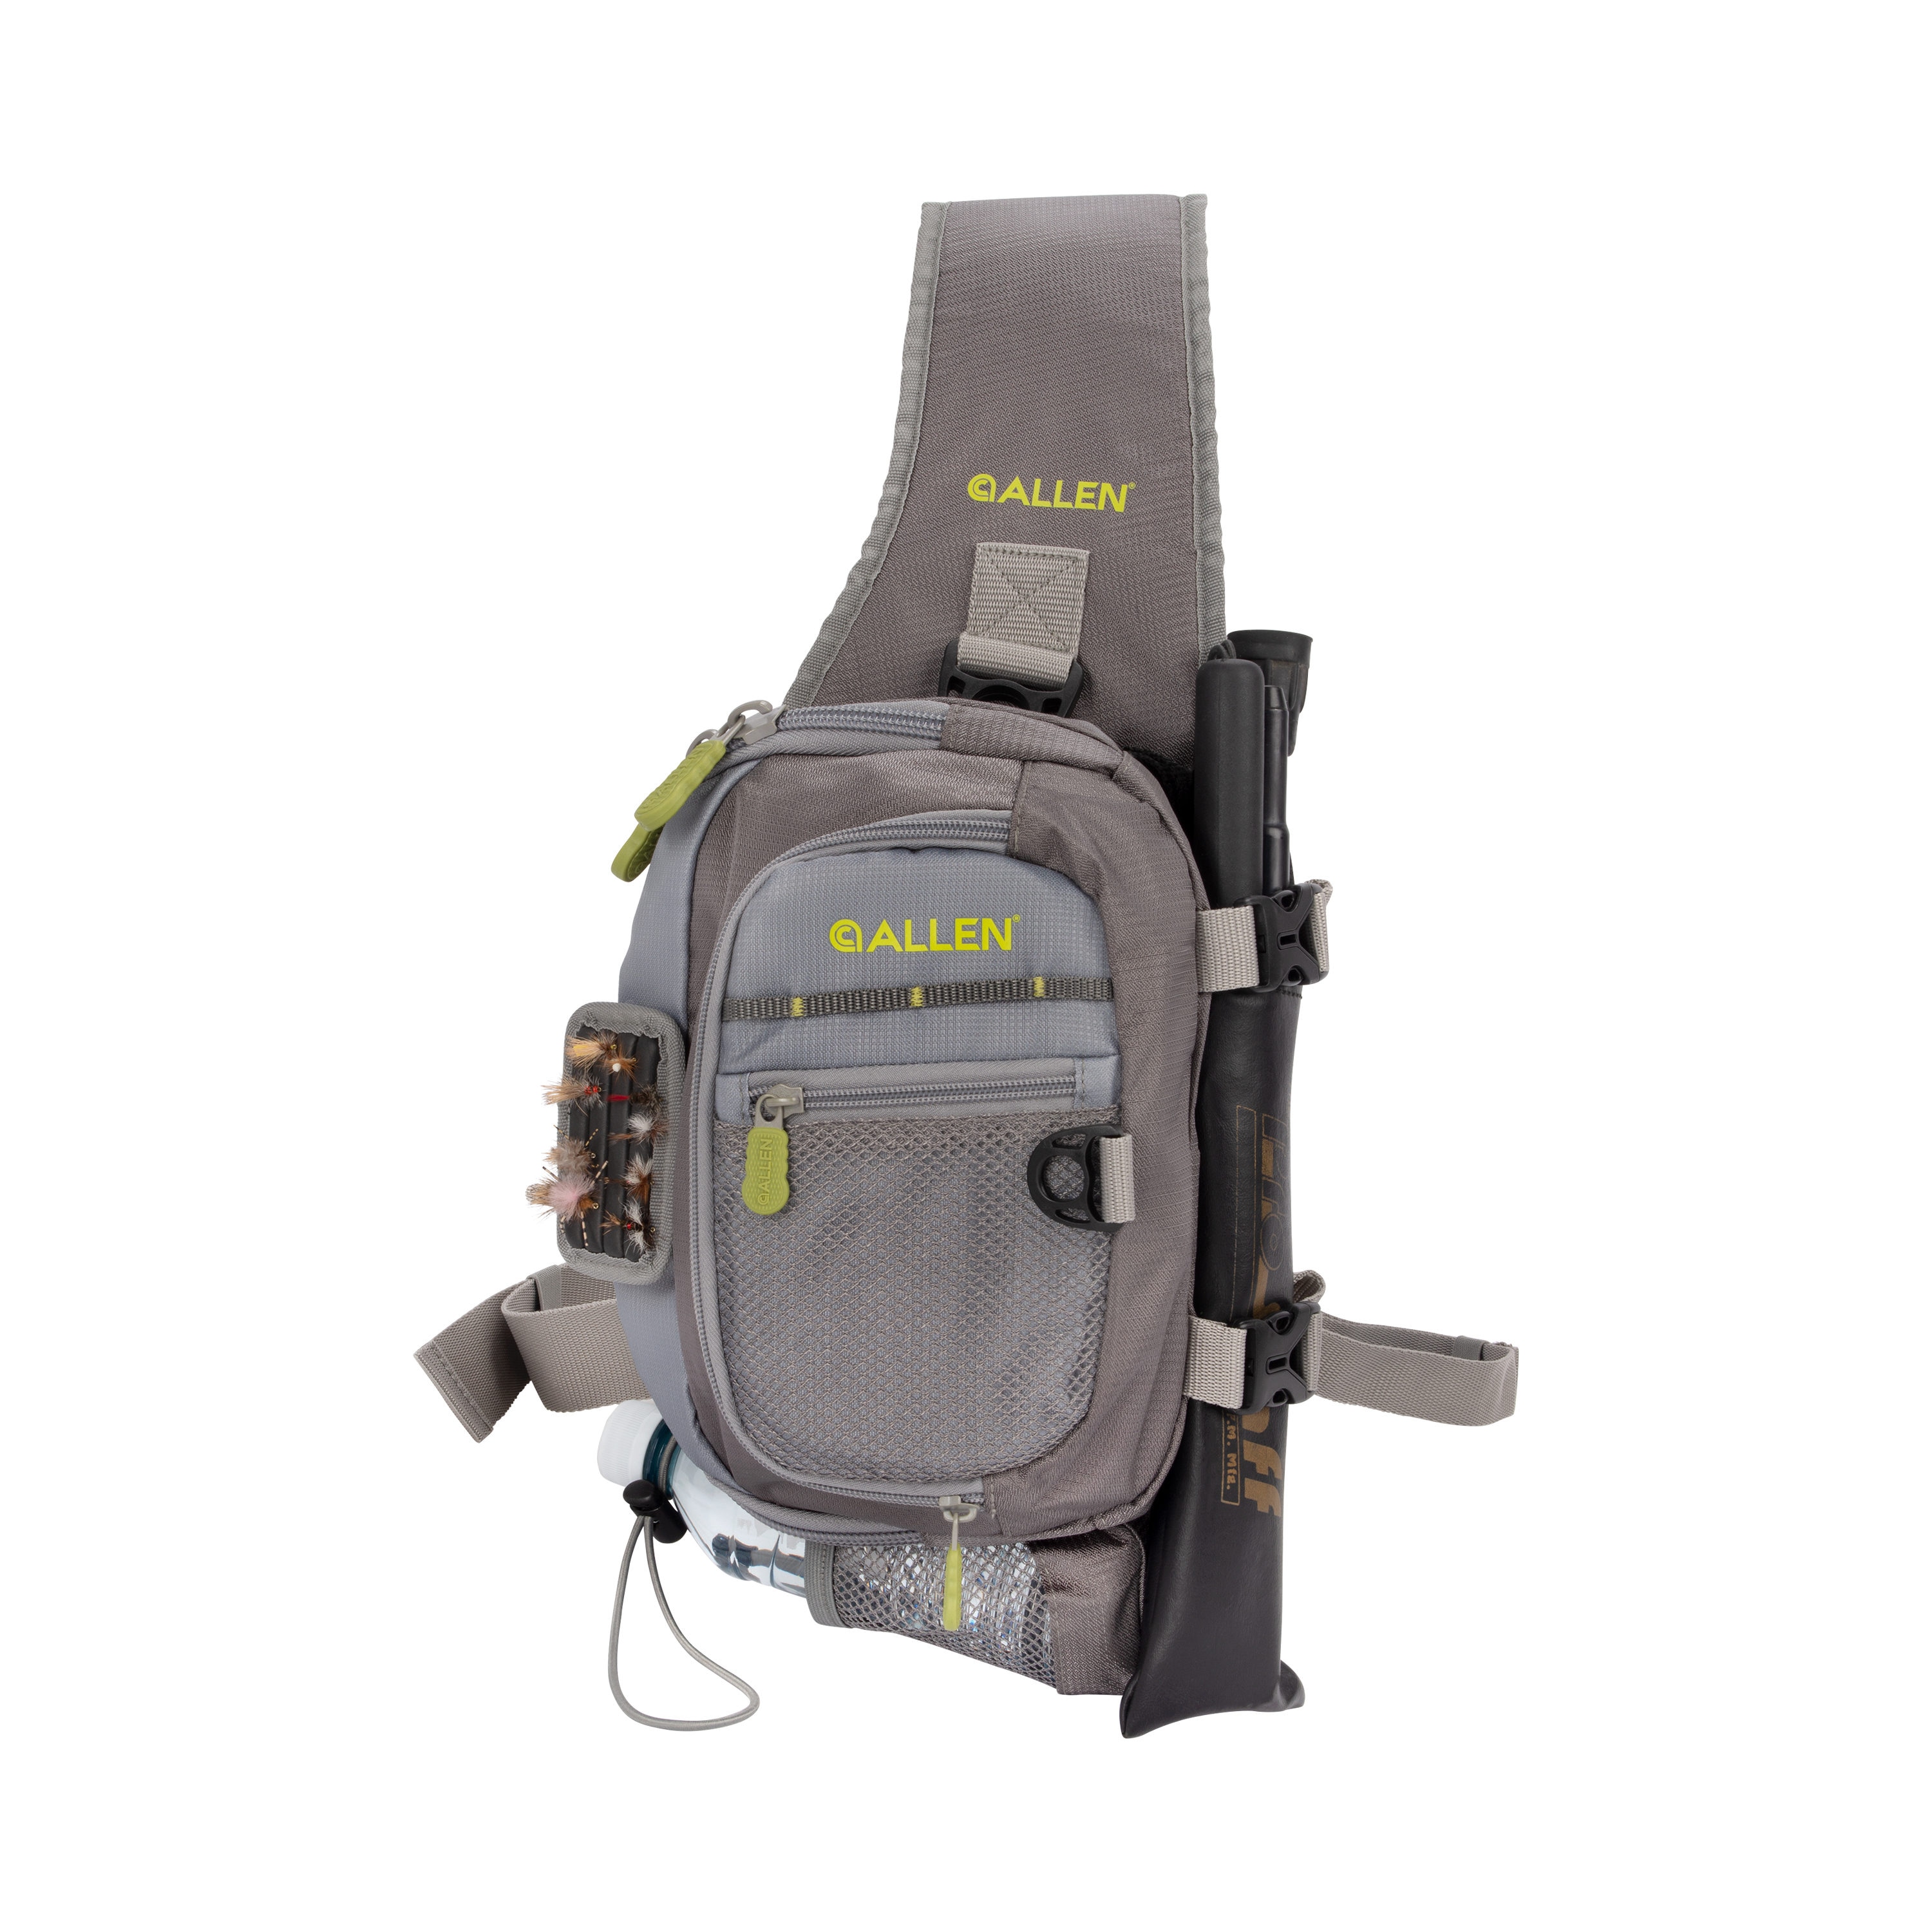 fishing sling backpack Hot Sale - OFF 57%